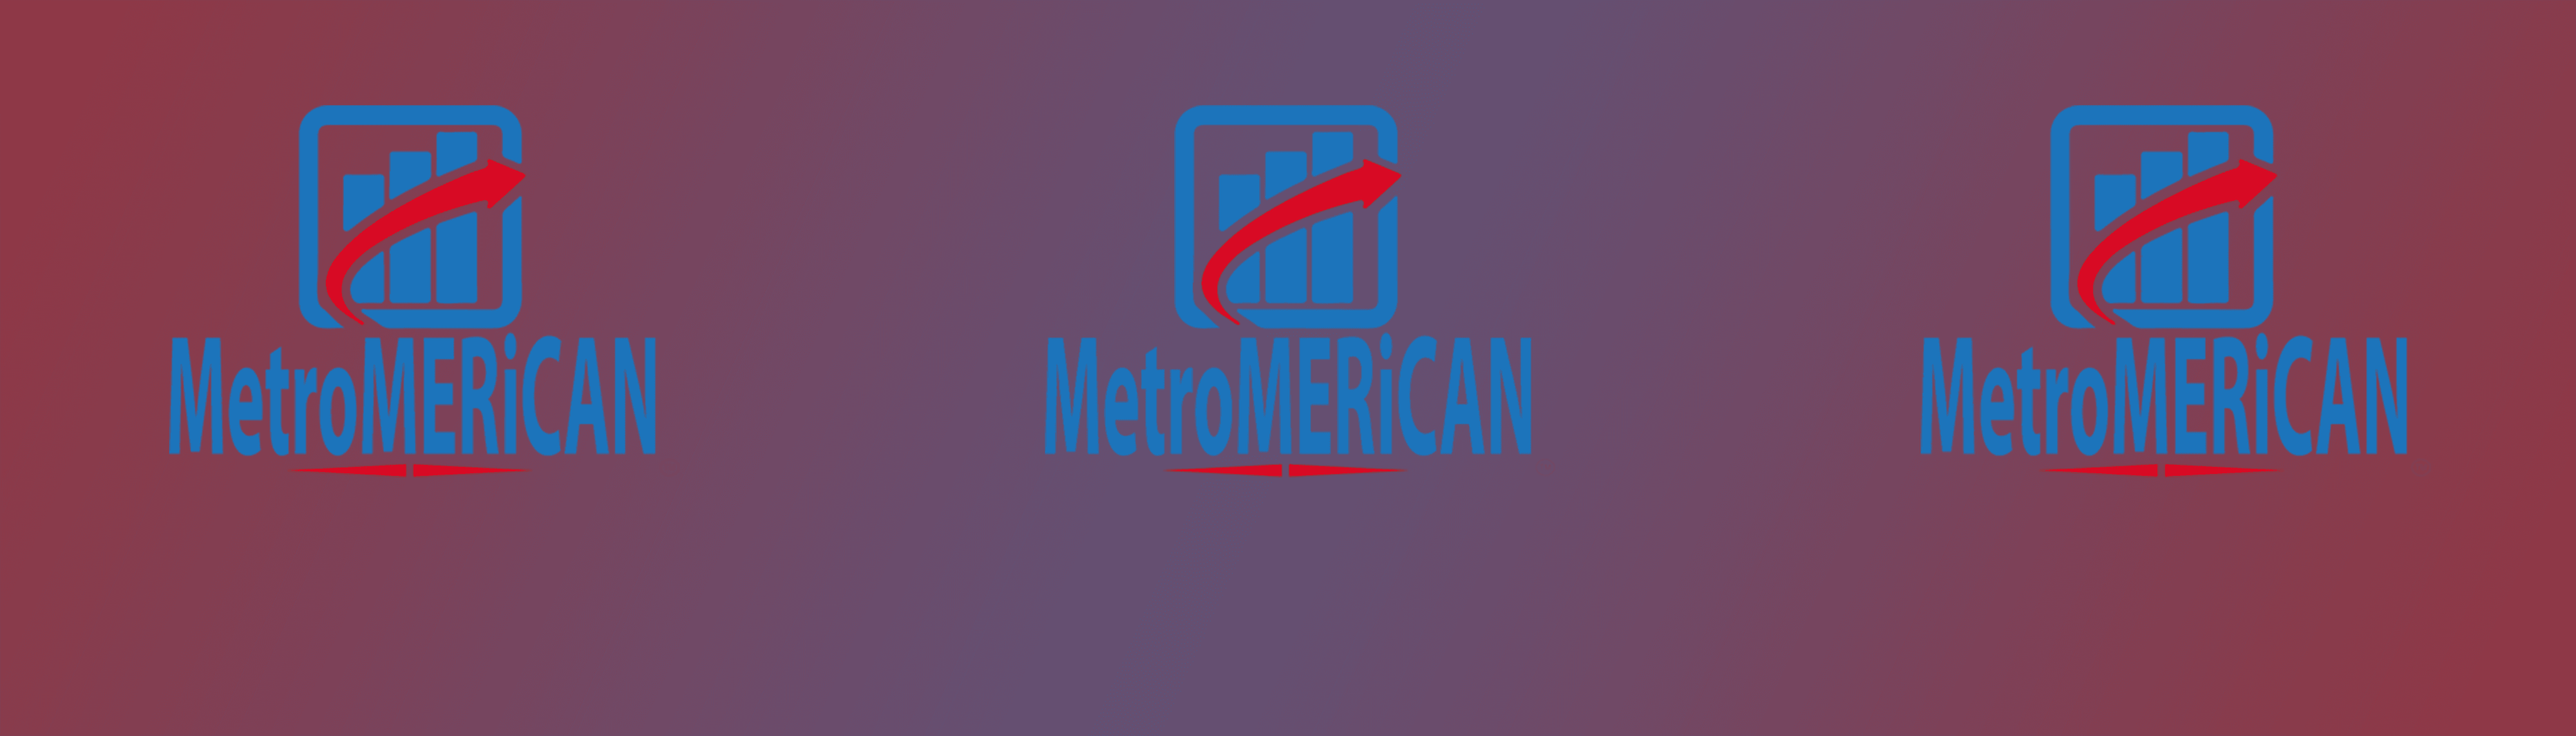 Metromerican banner